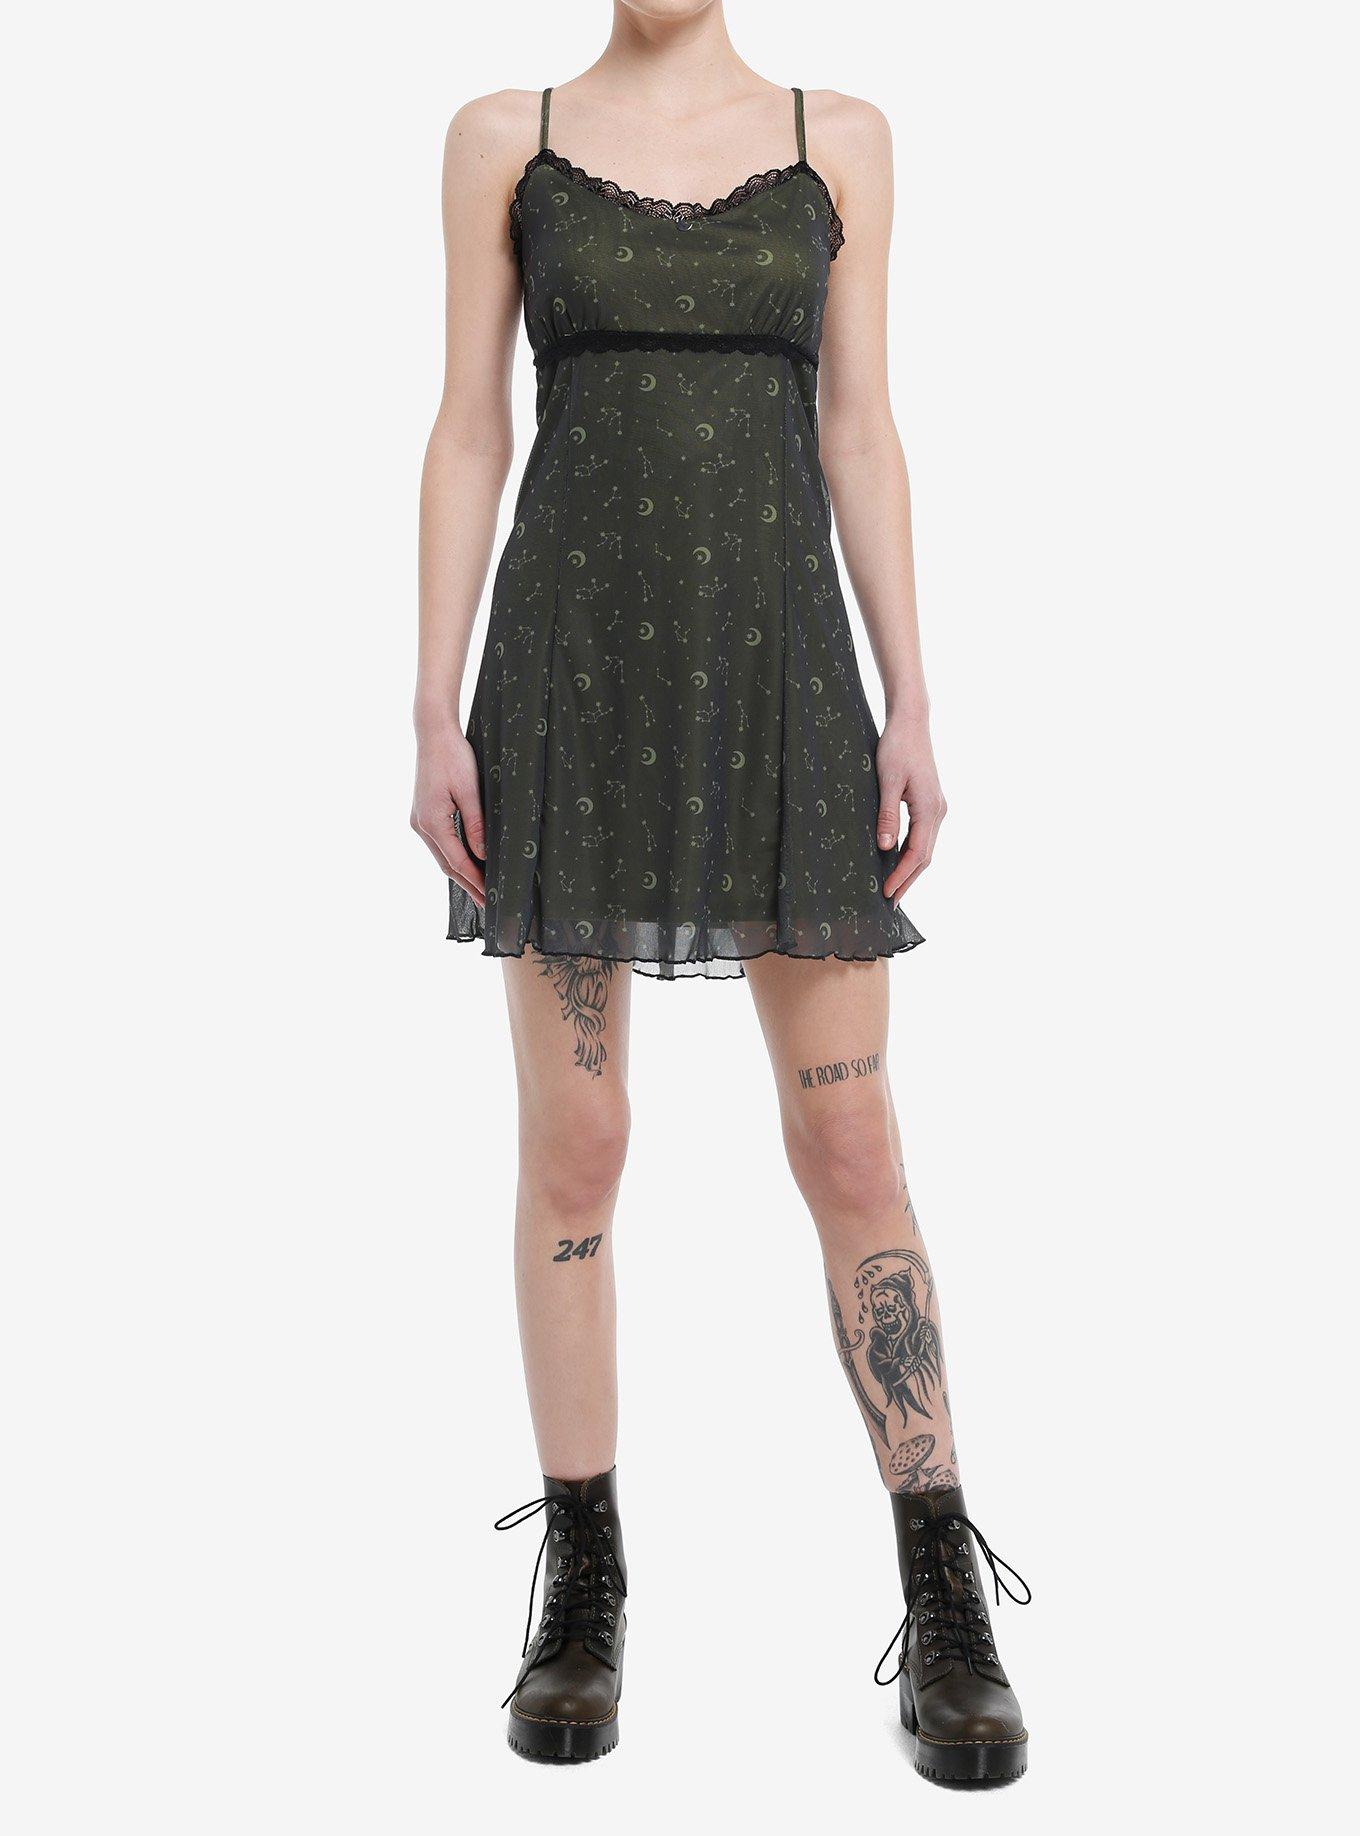 Cosmic Aura Constellation Black Lace Mini Dress